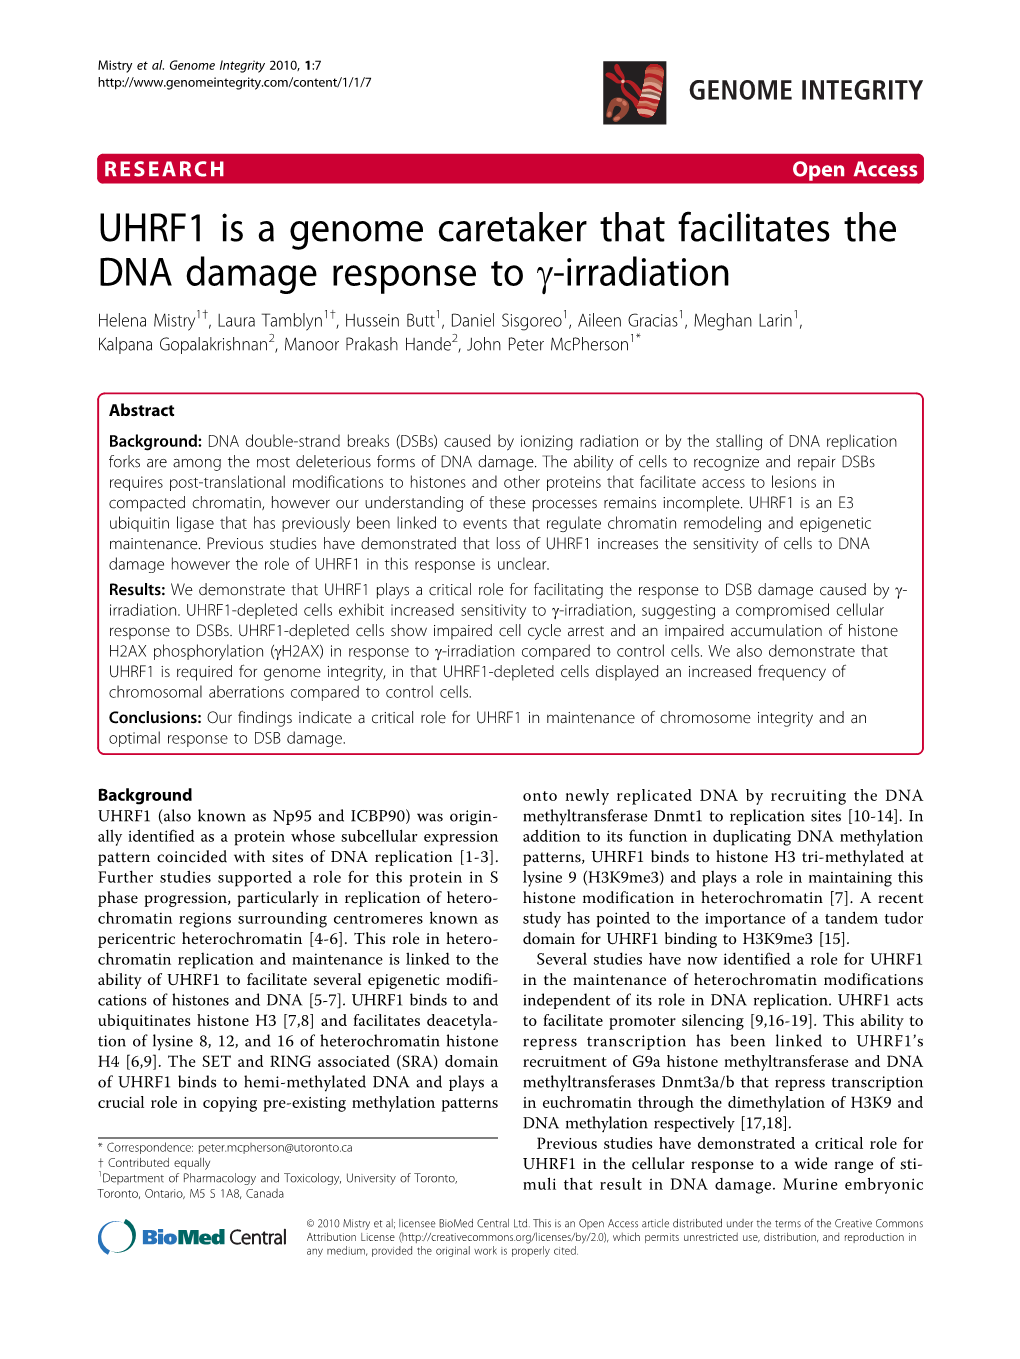 UHRF1 Is a Genome Caretaker That Facilitates the DNA Damage